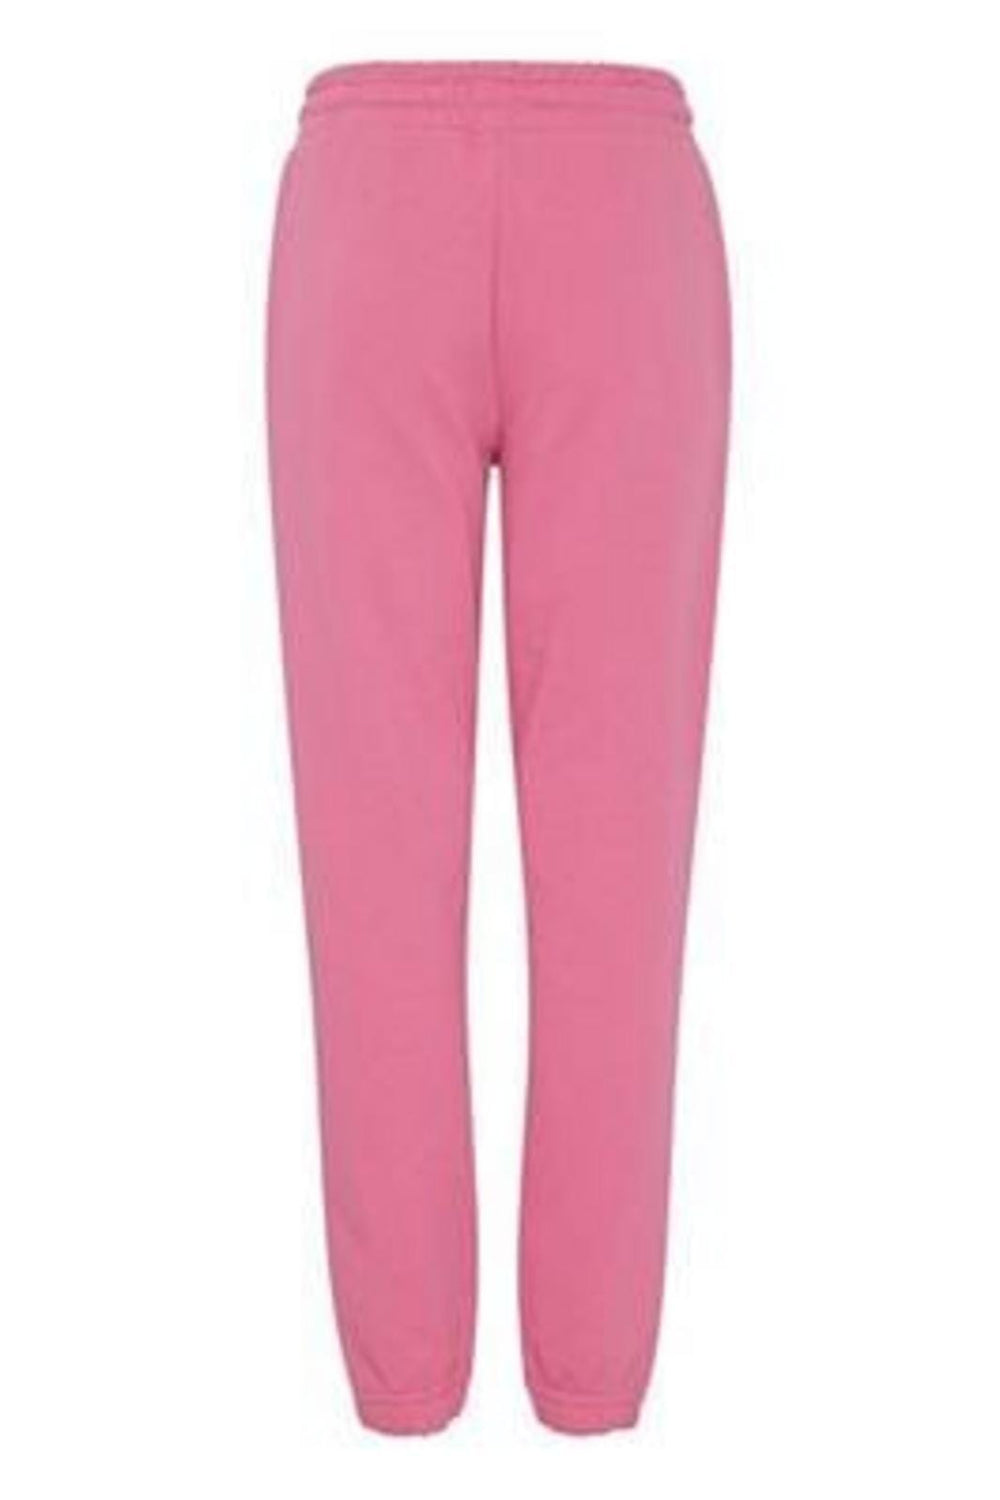 The Jogg Concept - Jcsafine Jogging Pants - 162126 Azalea Pink Sweatpants 